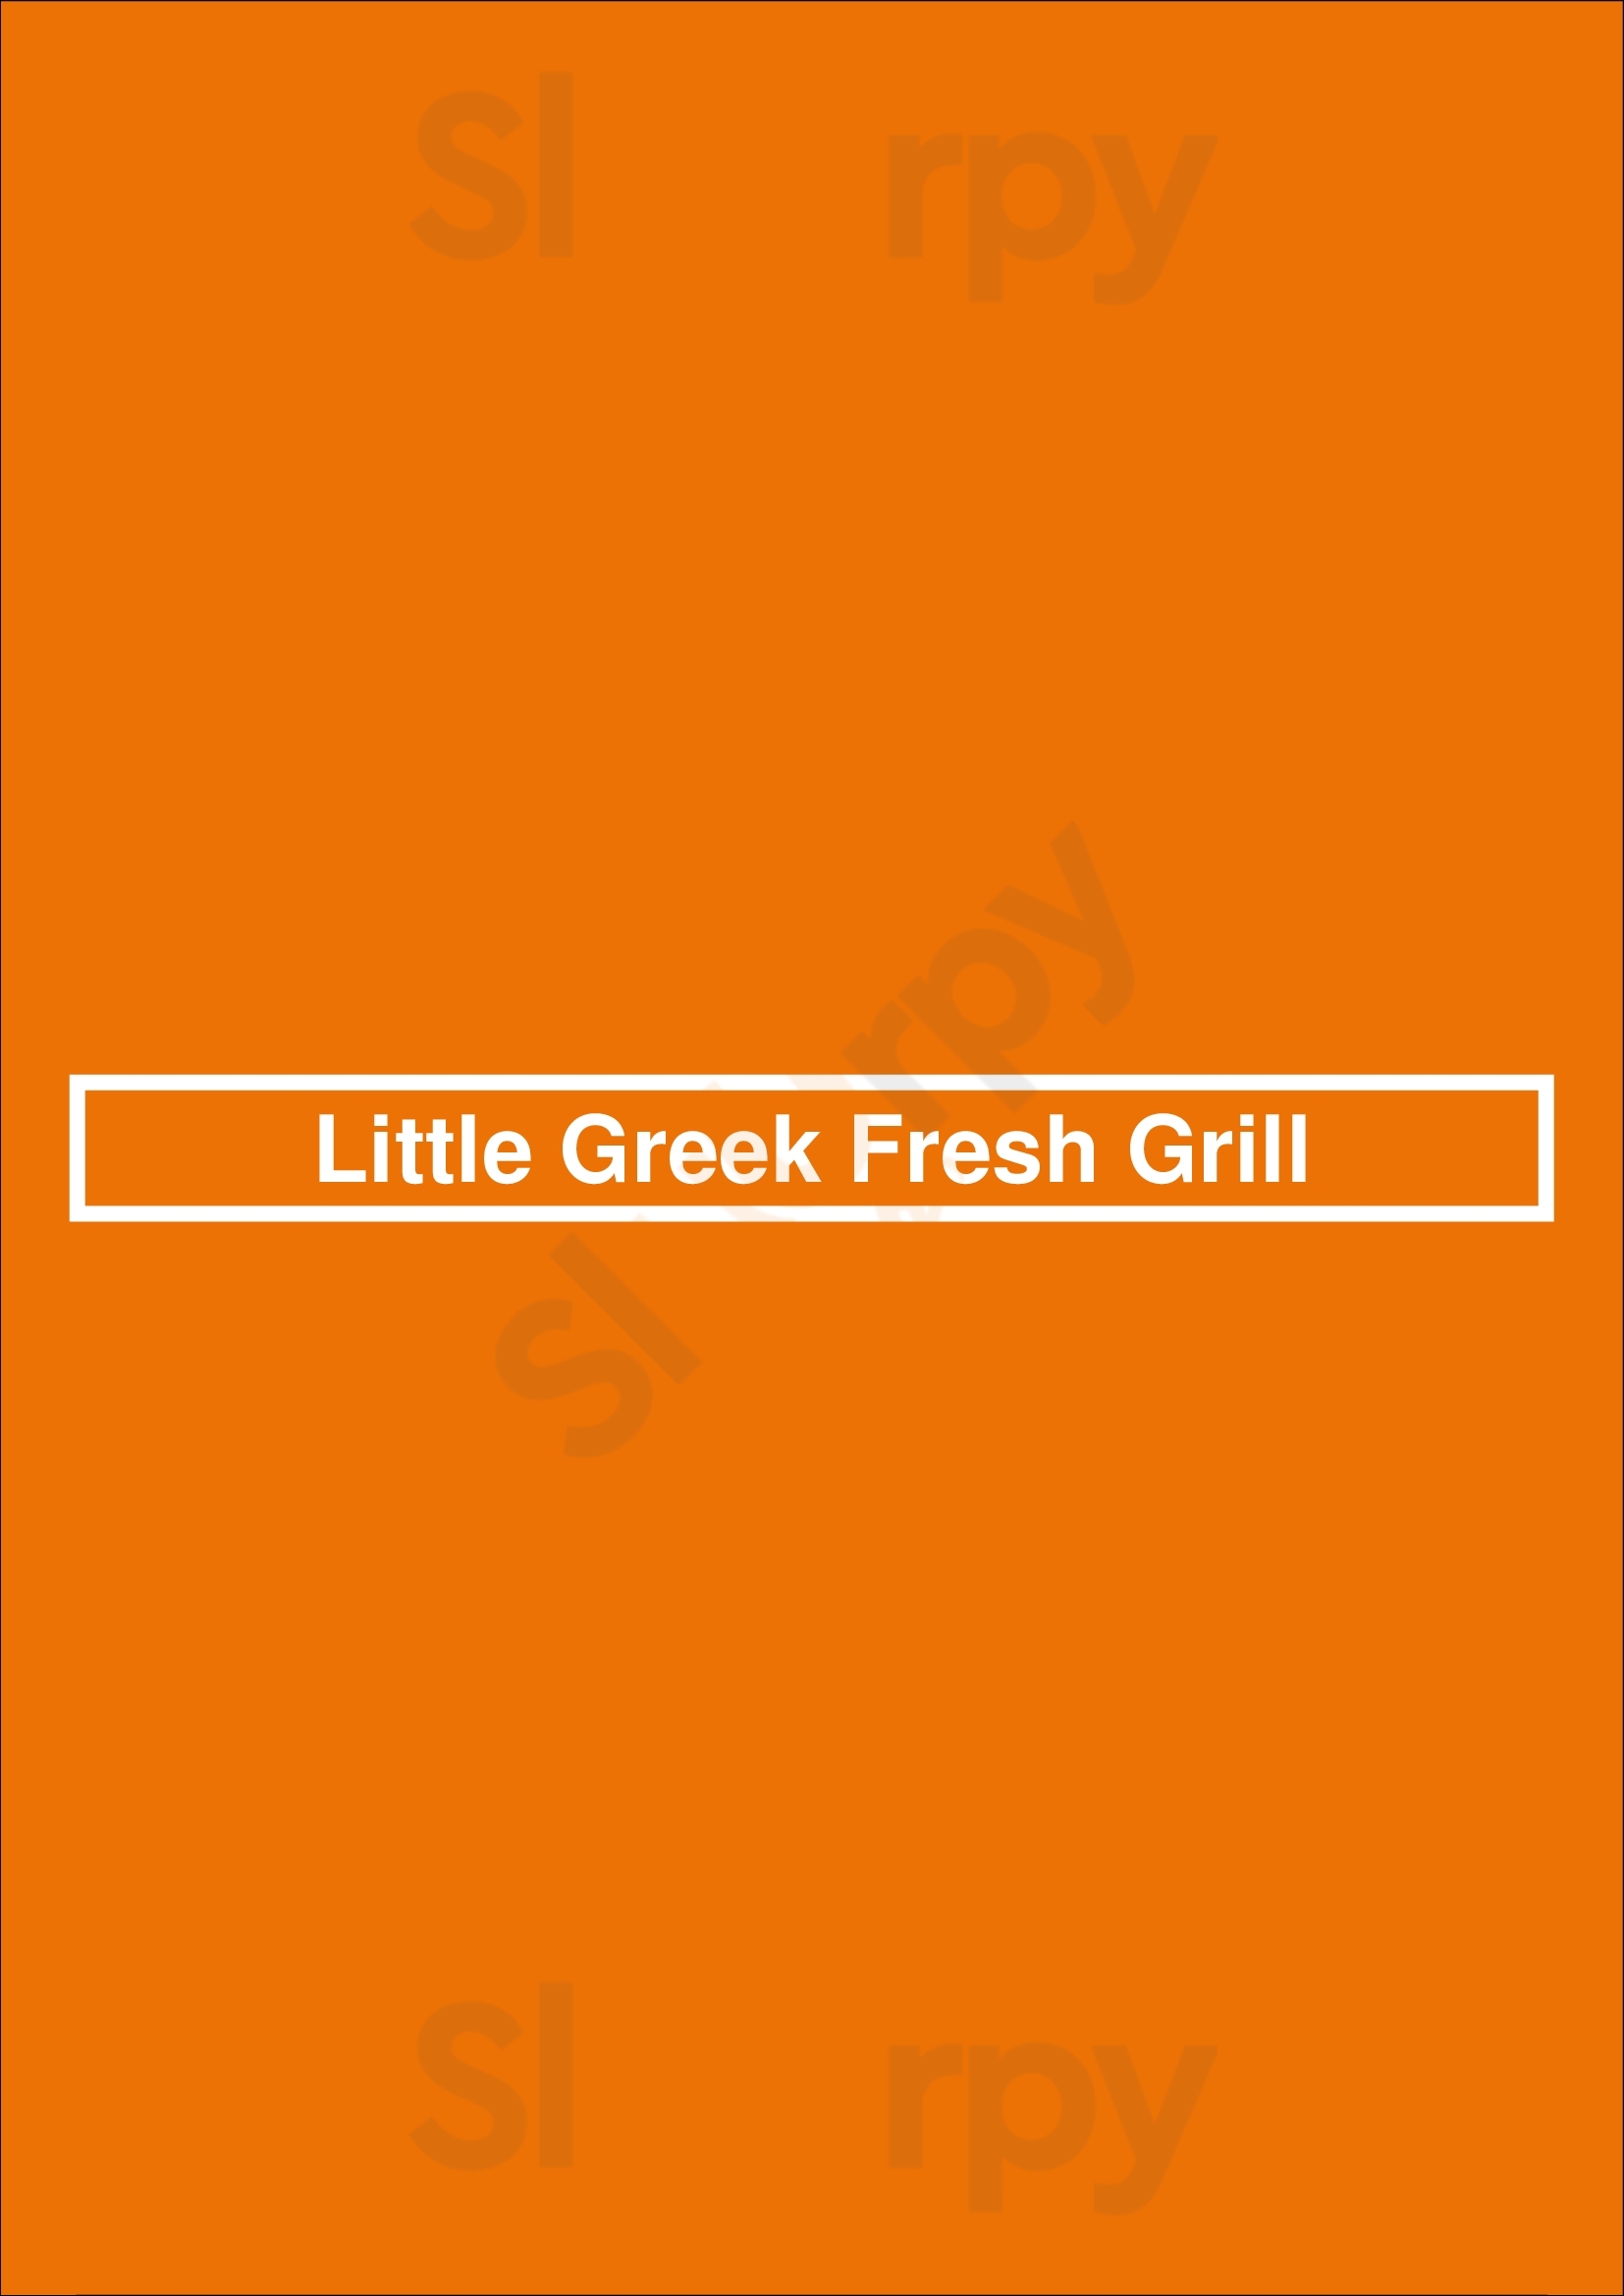 Little Greek Fresh Grill Dallas Menu - 1